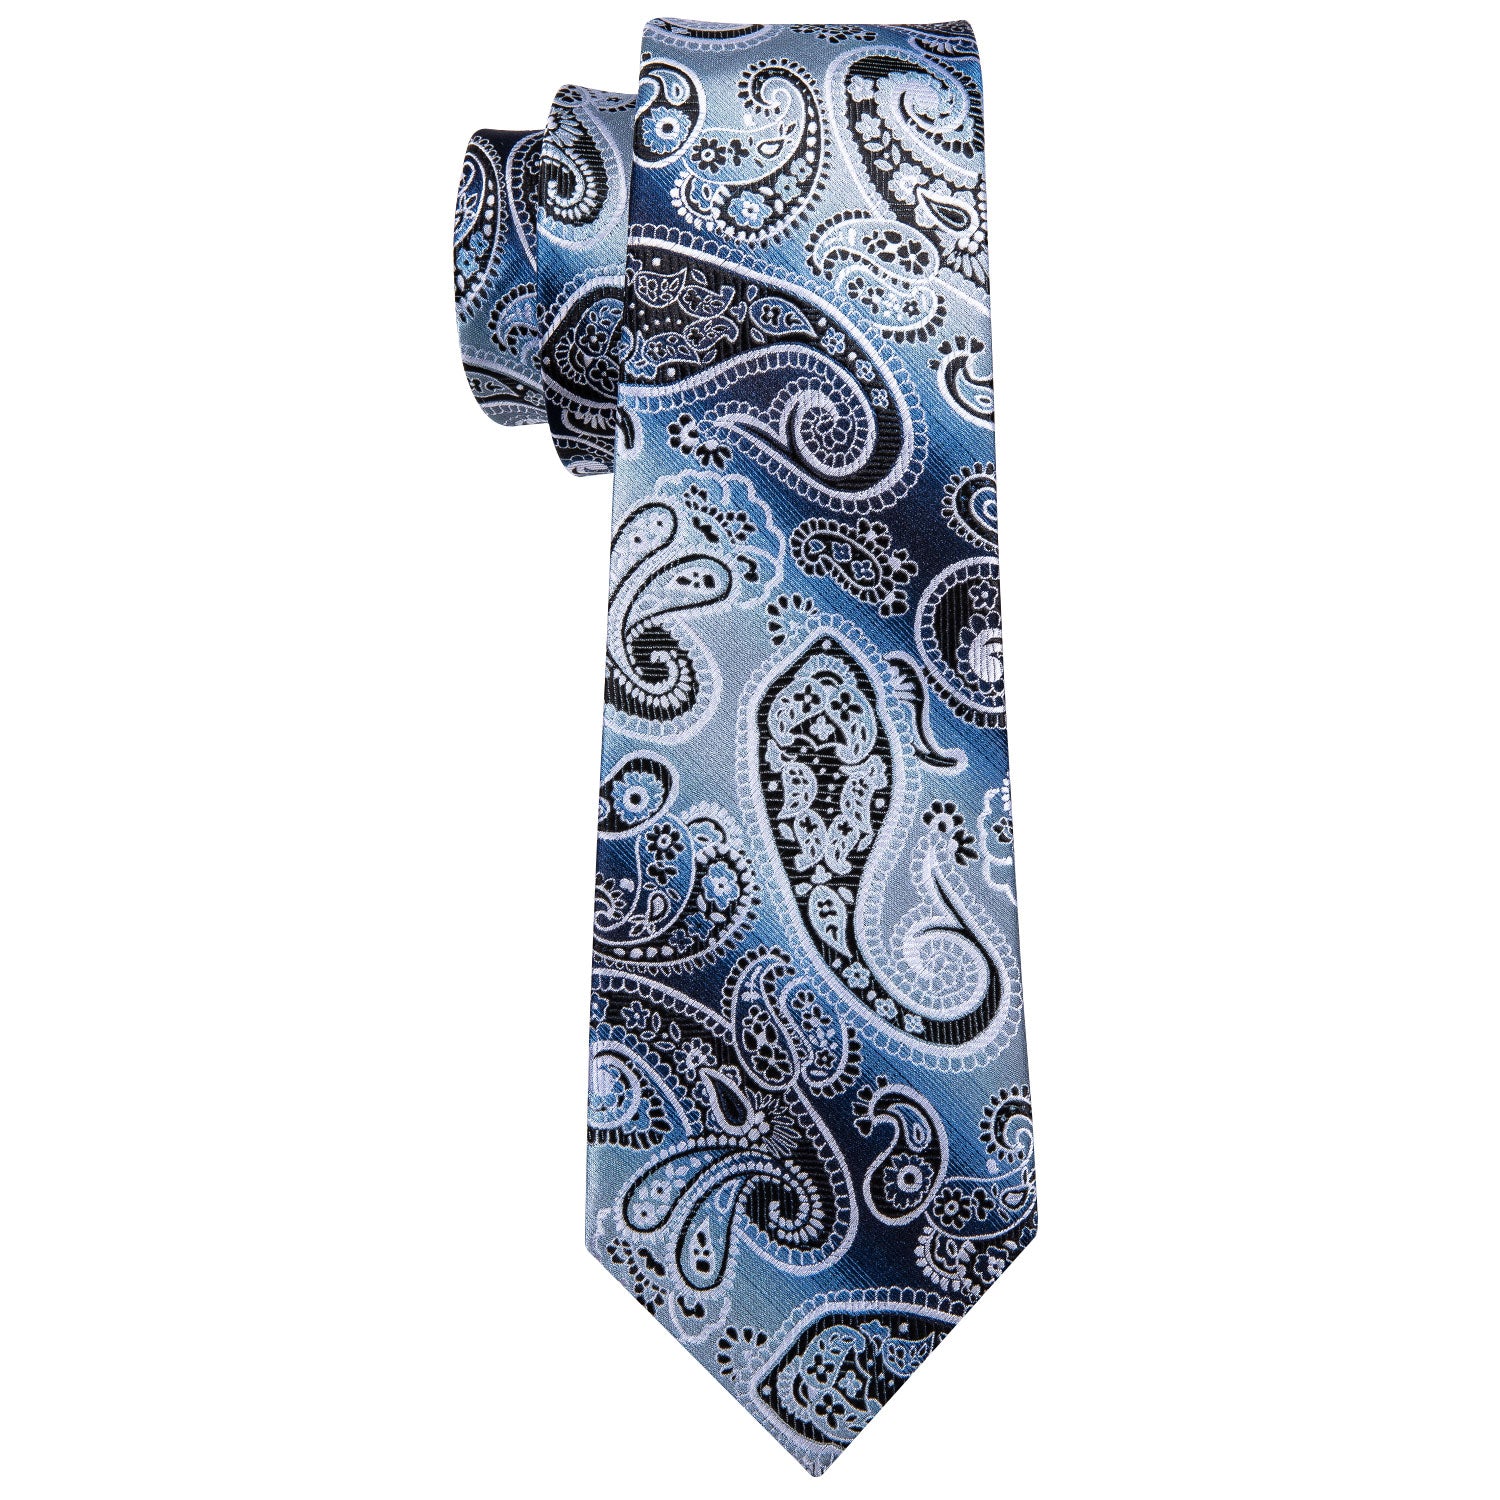 Grey Blue Paisley Necktie Pocket Square Cufflinks Set